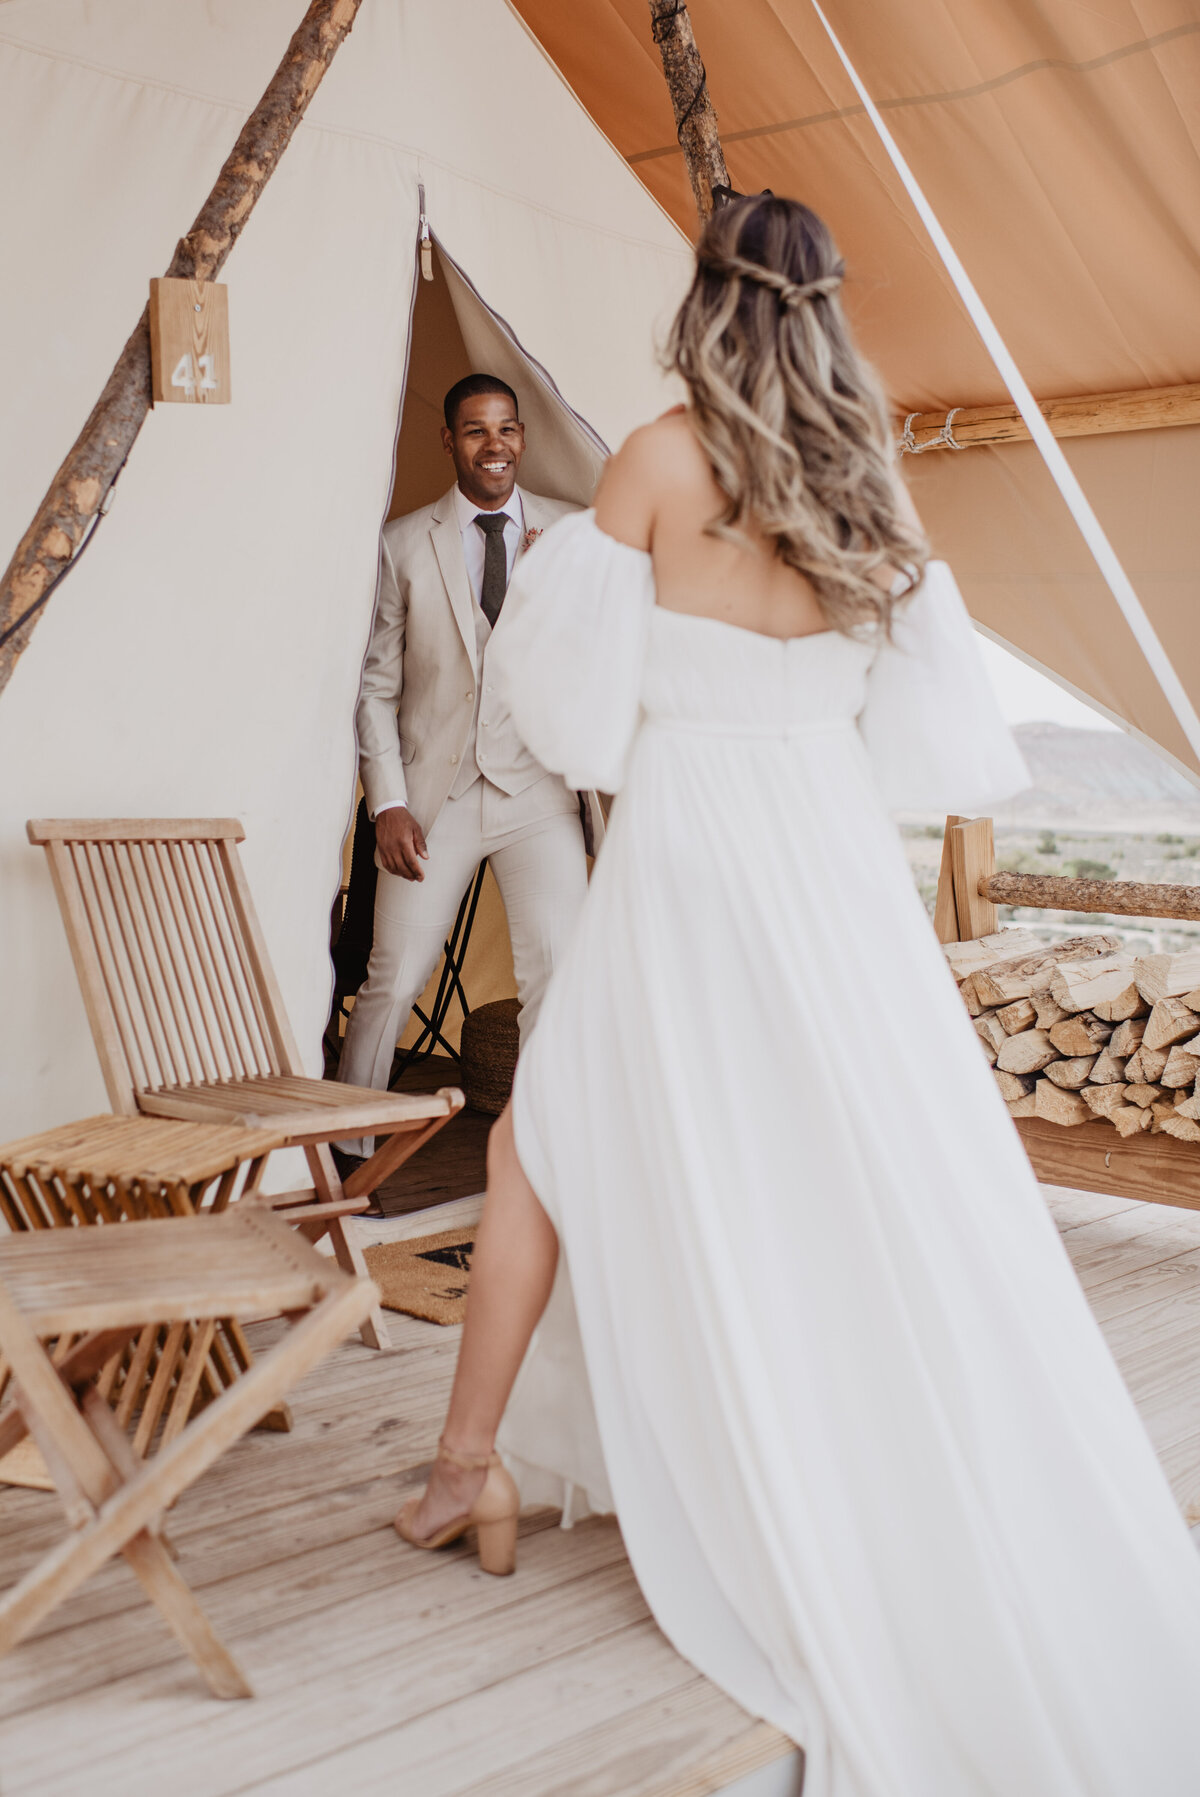 Utah Elopement Photographer captures bride and groom during first look